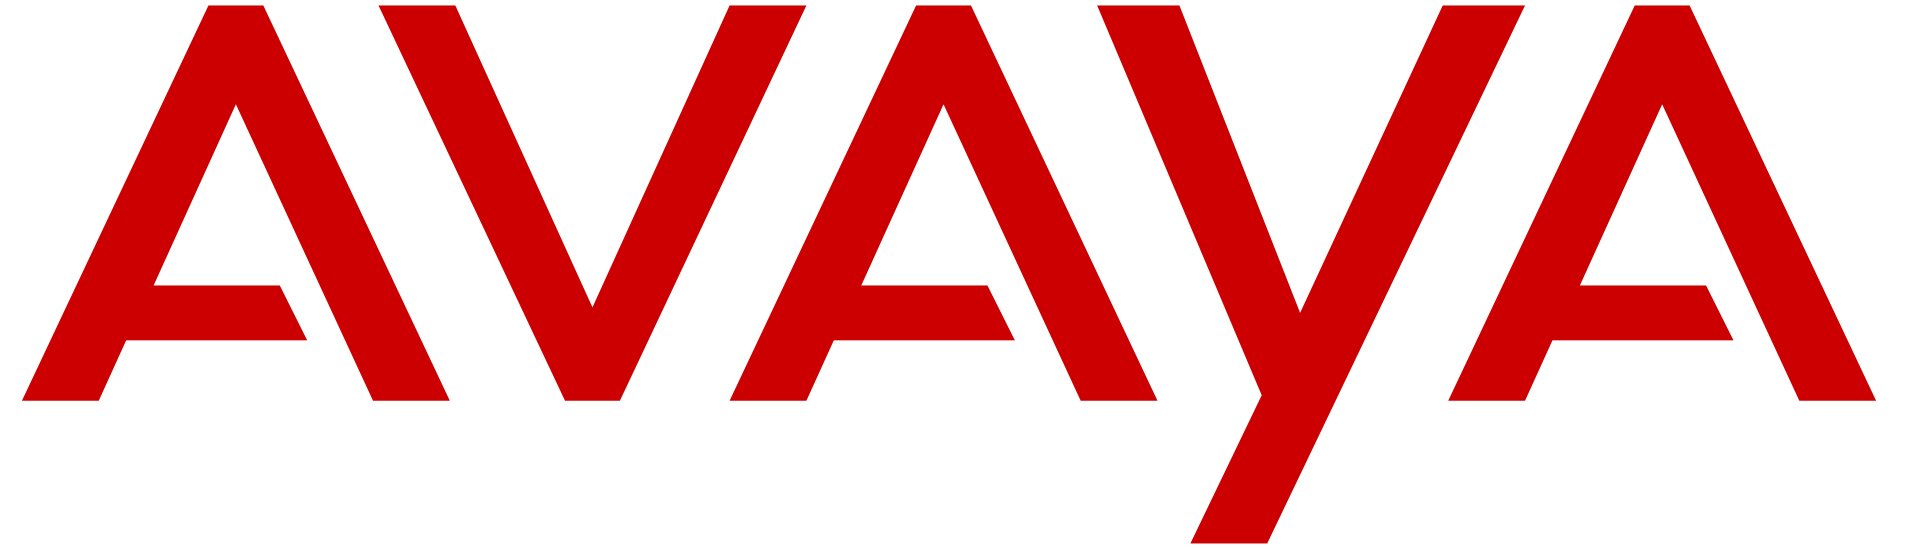 Avaya Inc - Avaya Holdings Corp